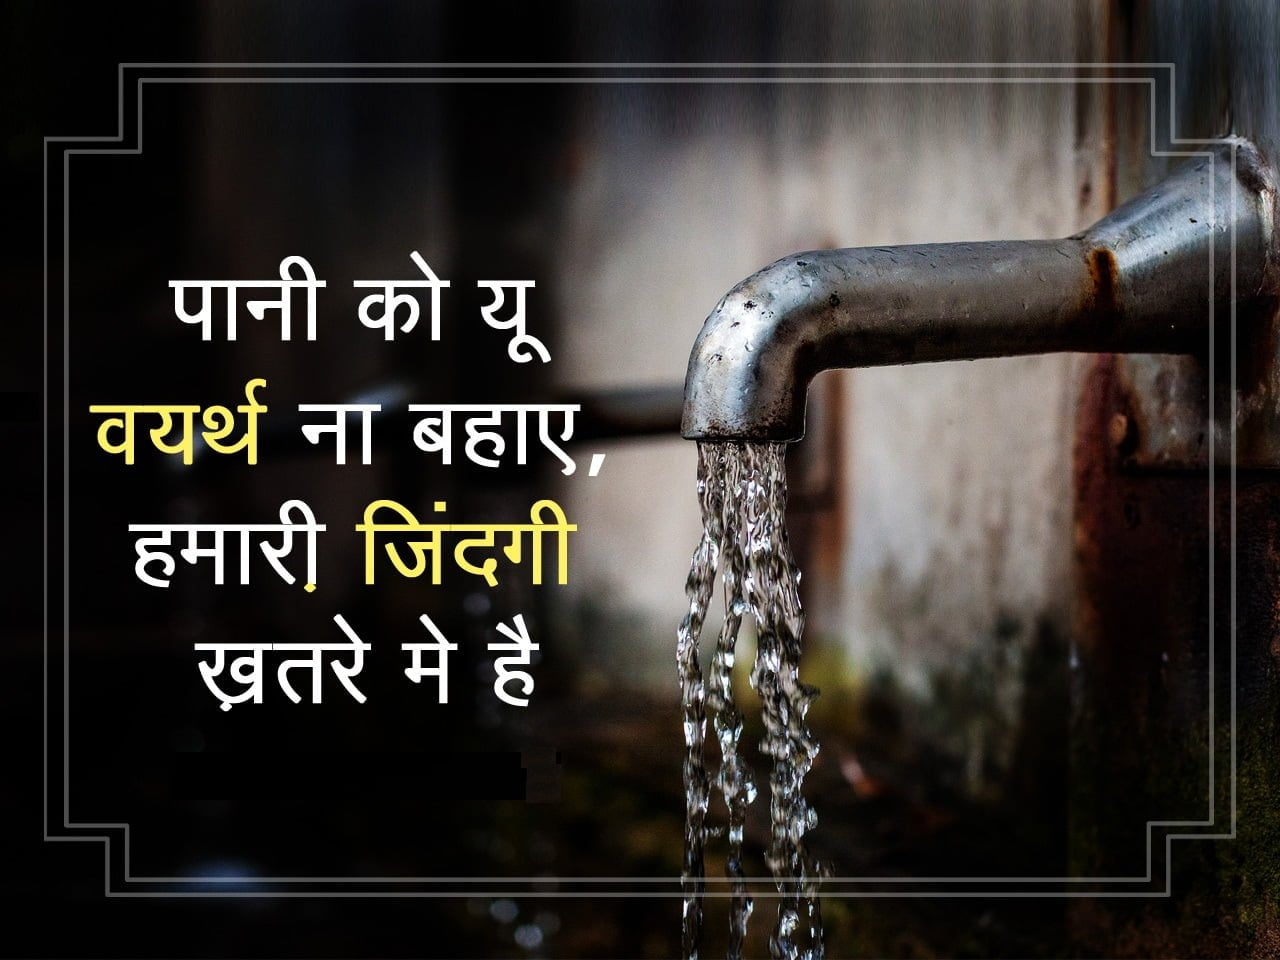 जल संरक्षण पर नारे - Save Water Slogans In Hindi